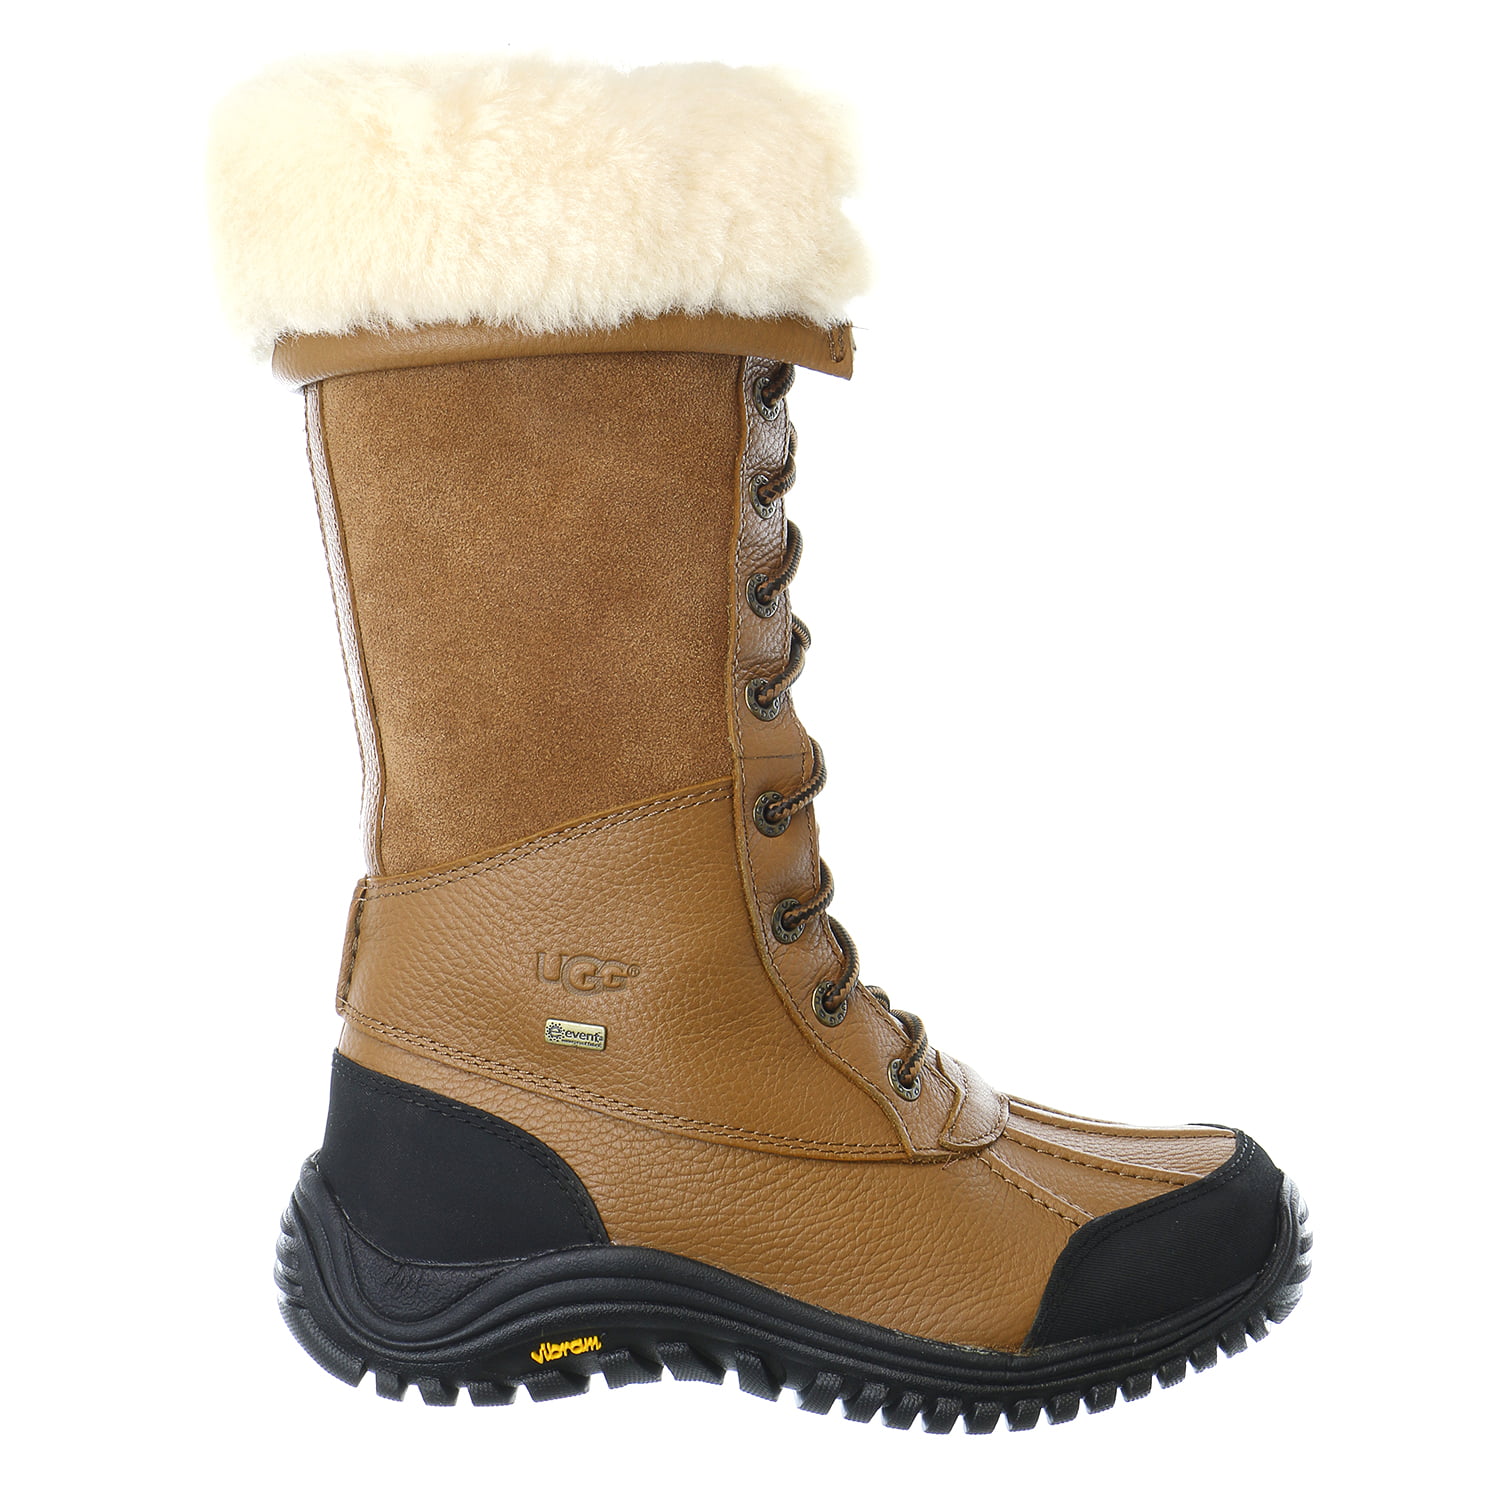 UGG Australia Adirondack Tall Waterproof Winter Boot - Womens - Walmart.com